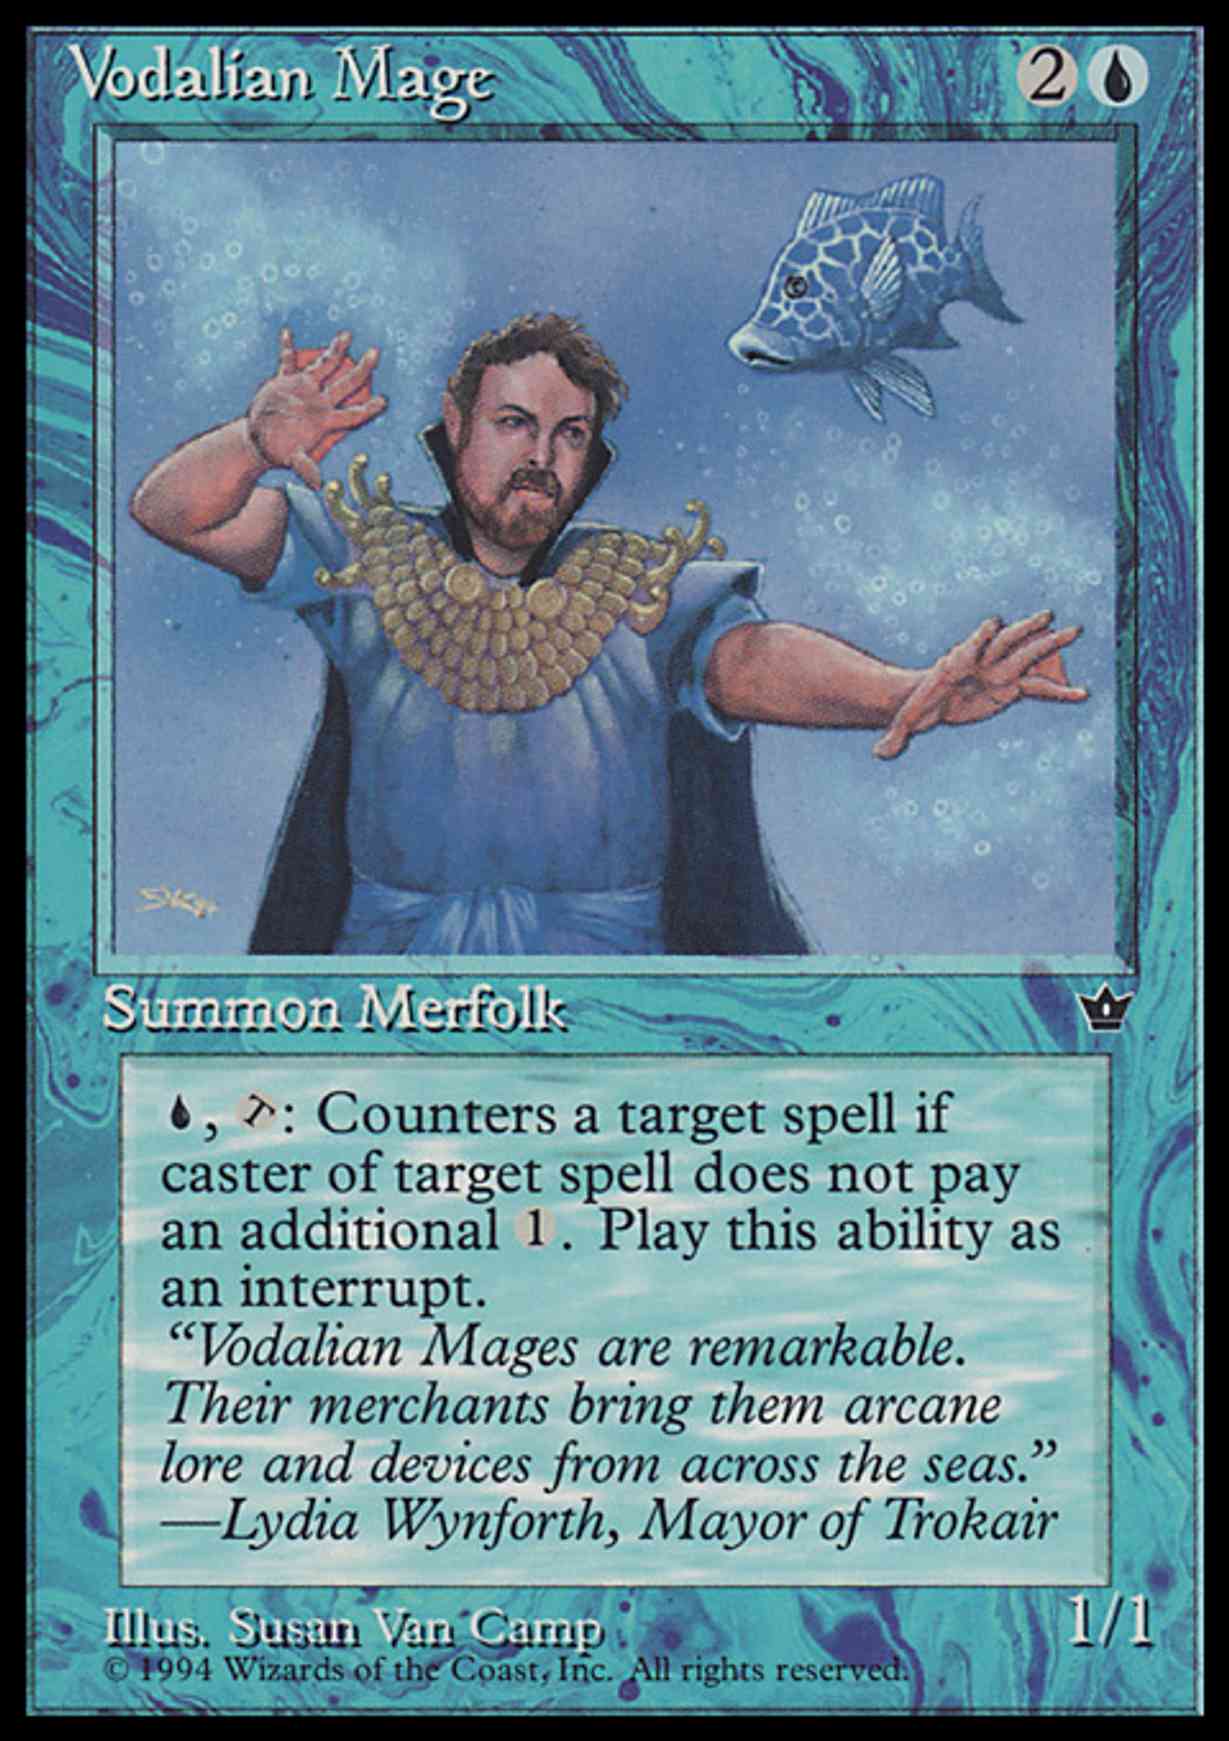 Vodalian Mage magic card front